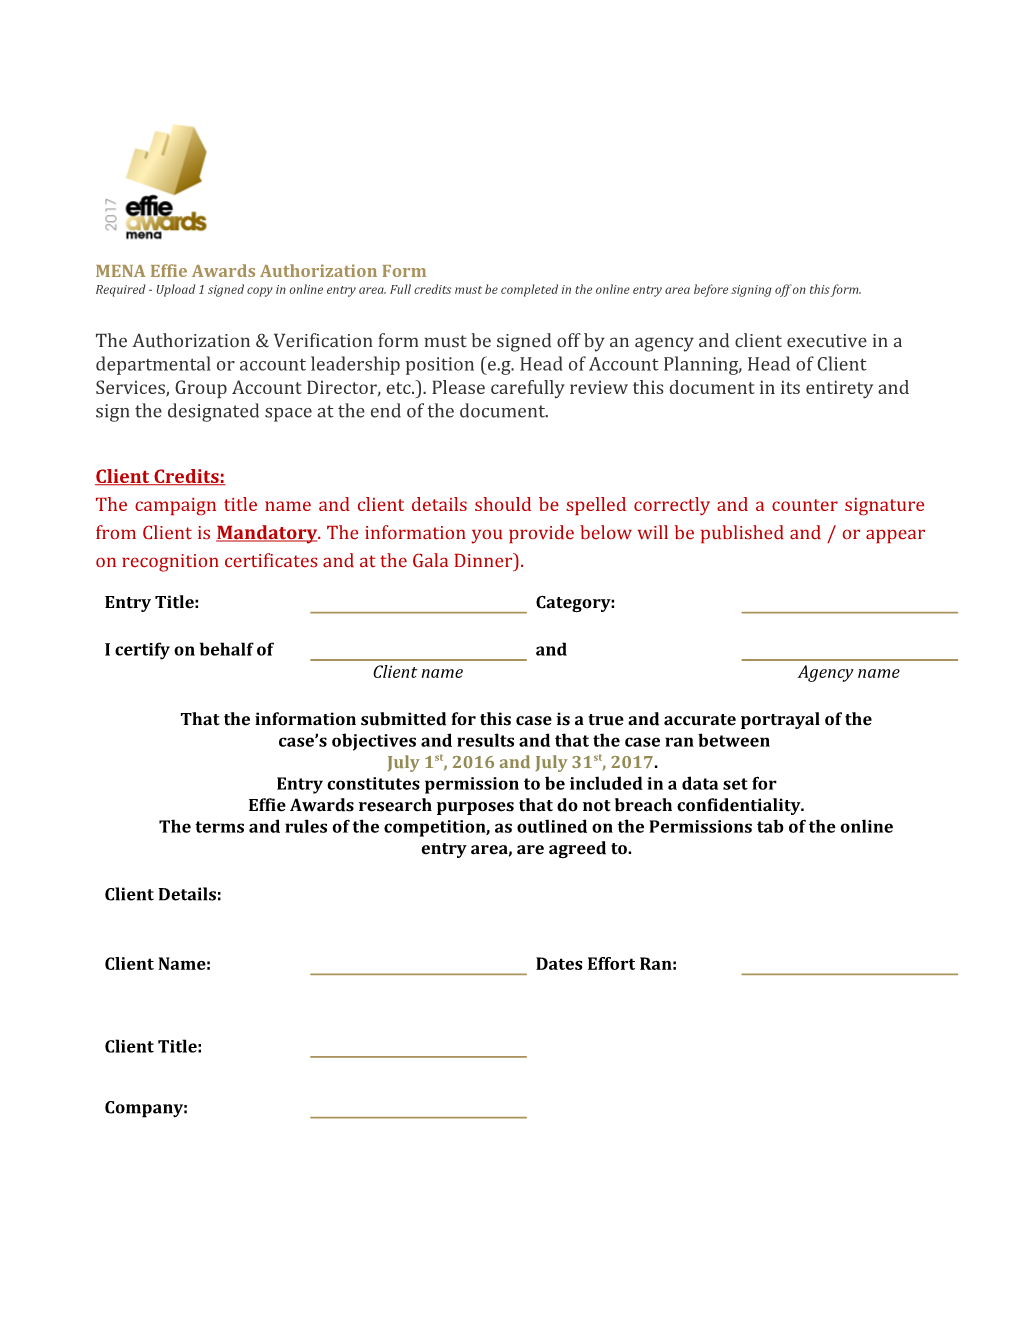 MENA Effie Awards Authorization Form